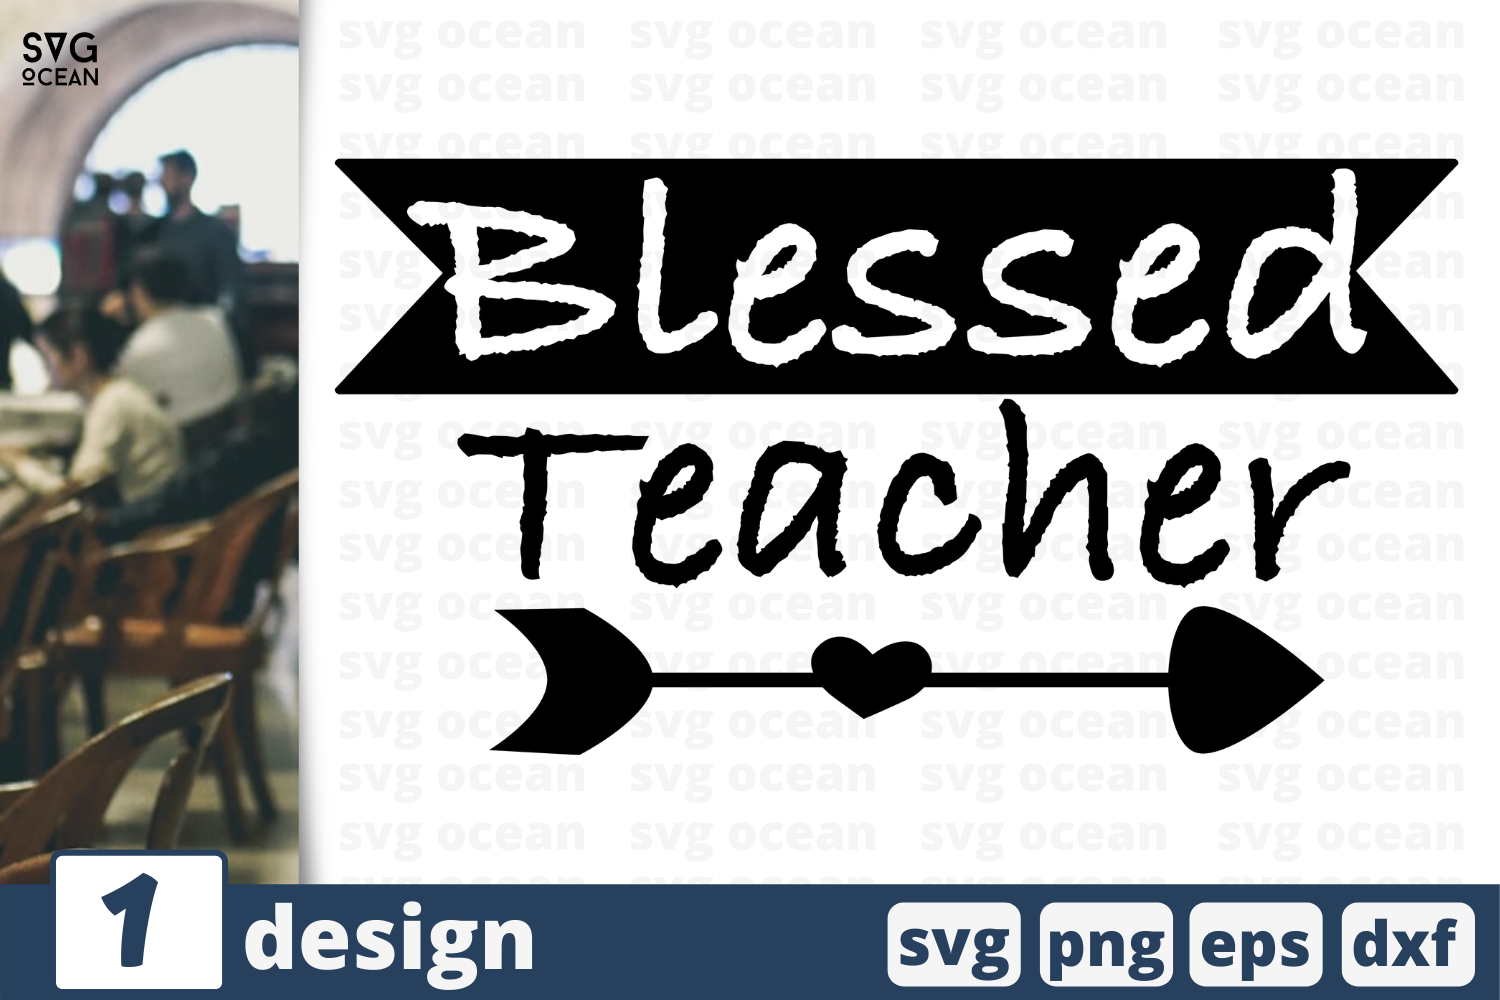 Download 1 Blessed Teacher Svg Bundle Quotes Cricut Svg By Svgocean Thehungryjpeg Com